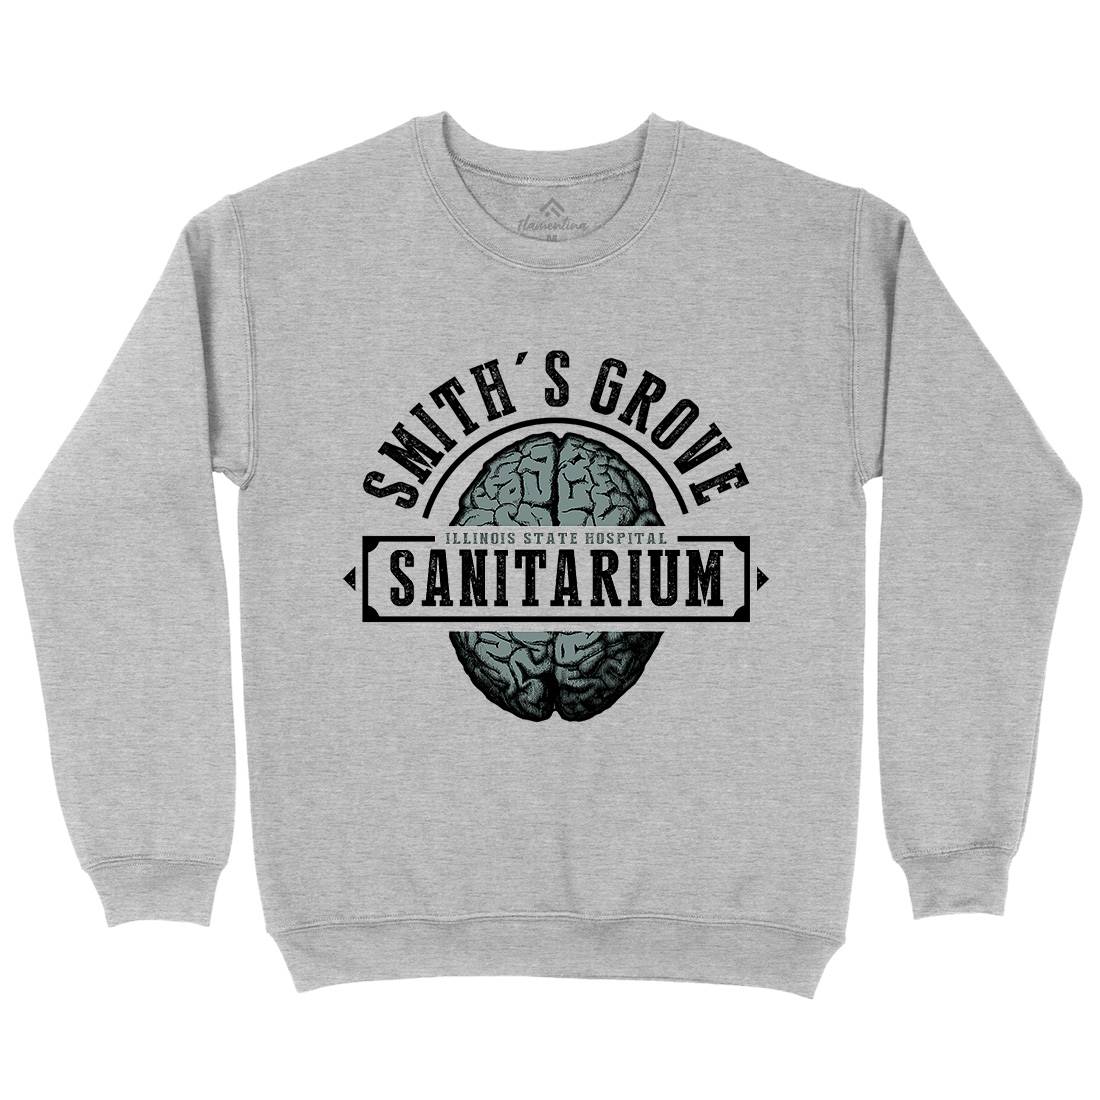 Smiths Grove Mens Crew Neck Sweatshirt Horror D331